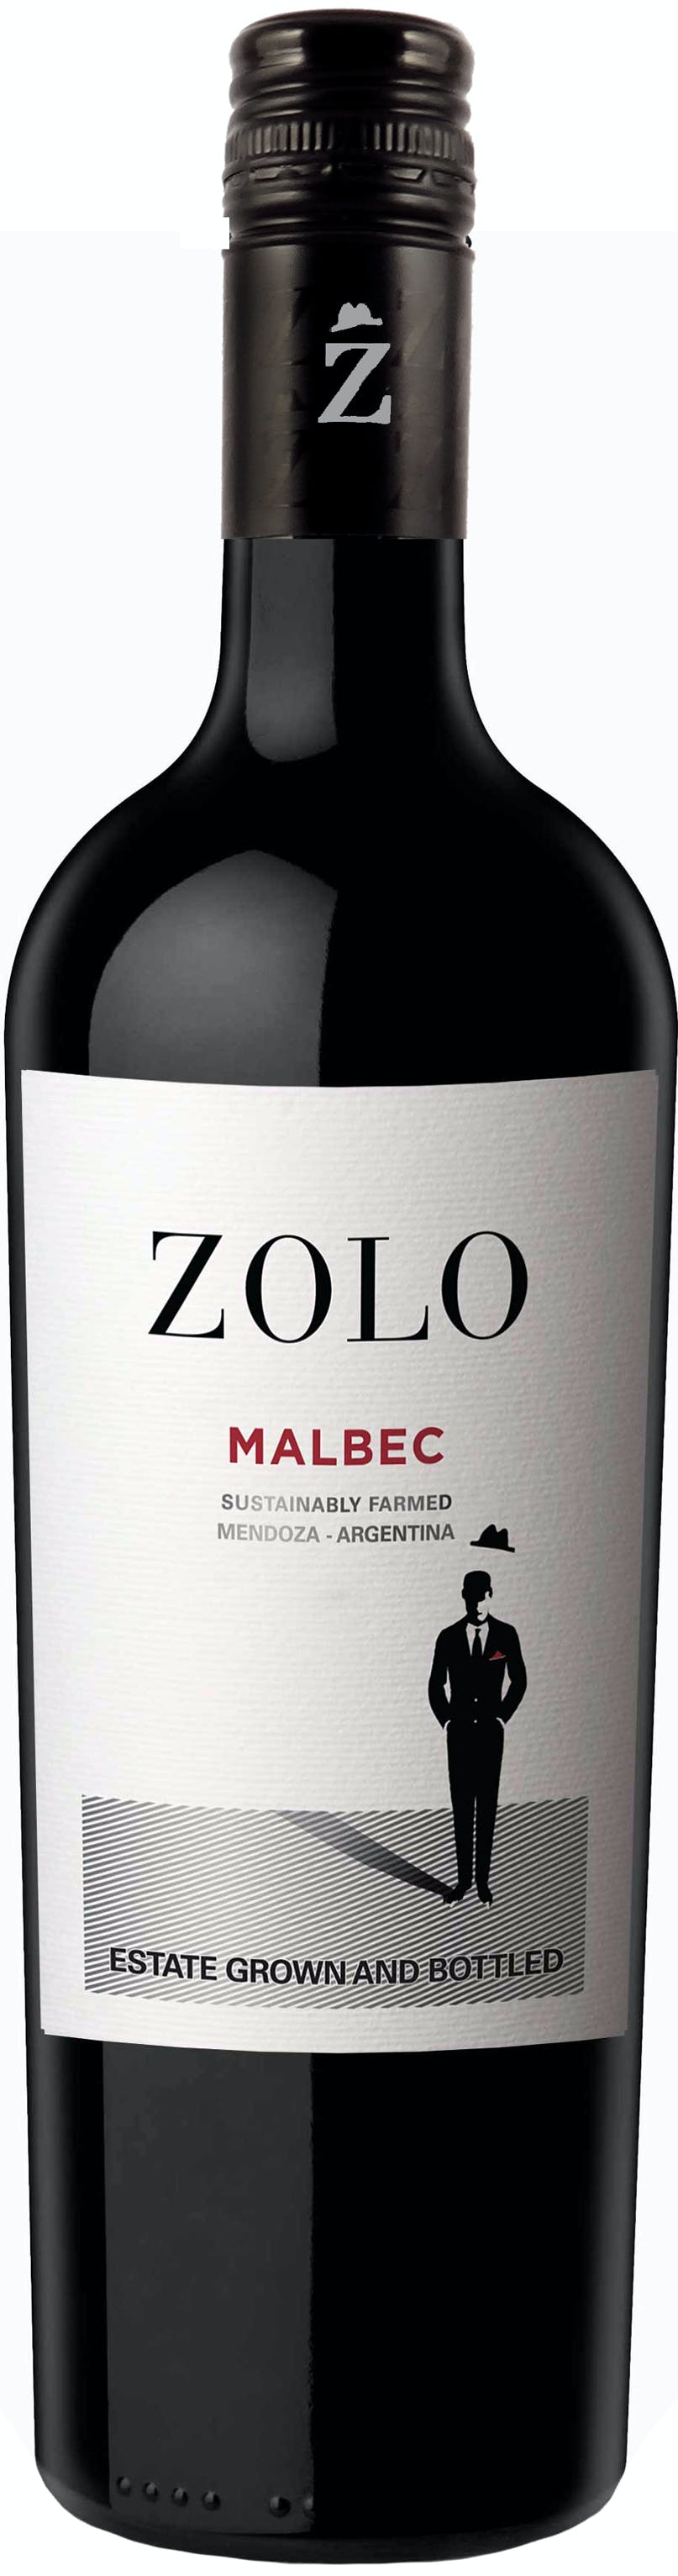 images/wine/Red Wine/Zolo Malbec.jpg